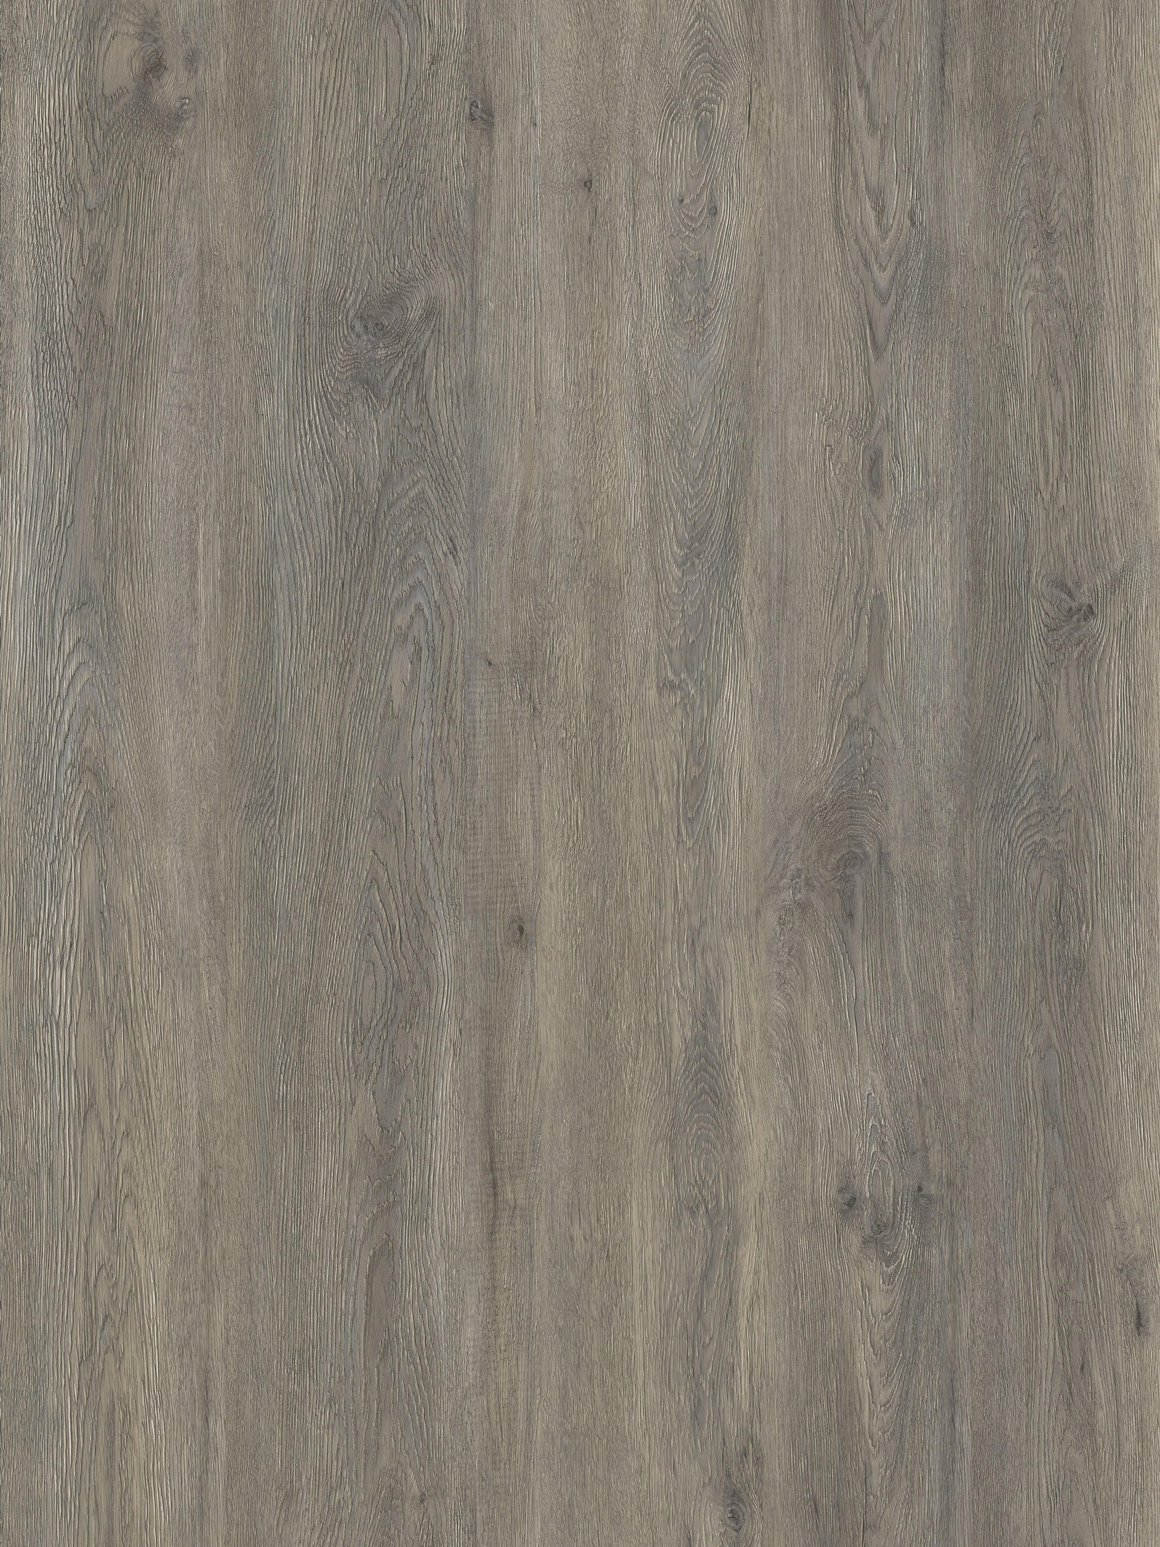 EAPC Wood Grain Flooring SC012  9" * 60" * 7mm